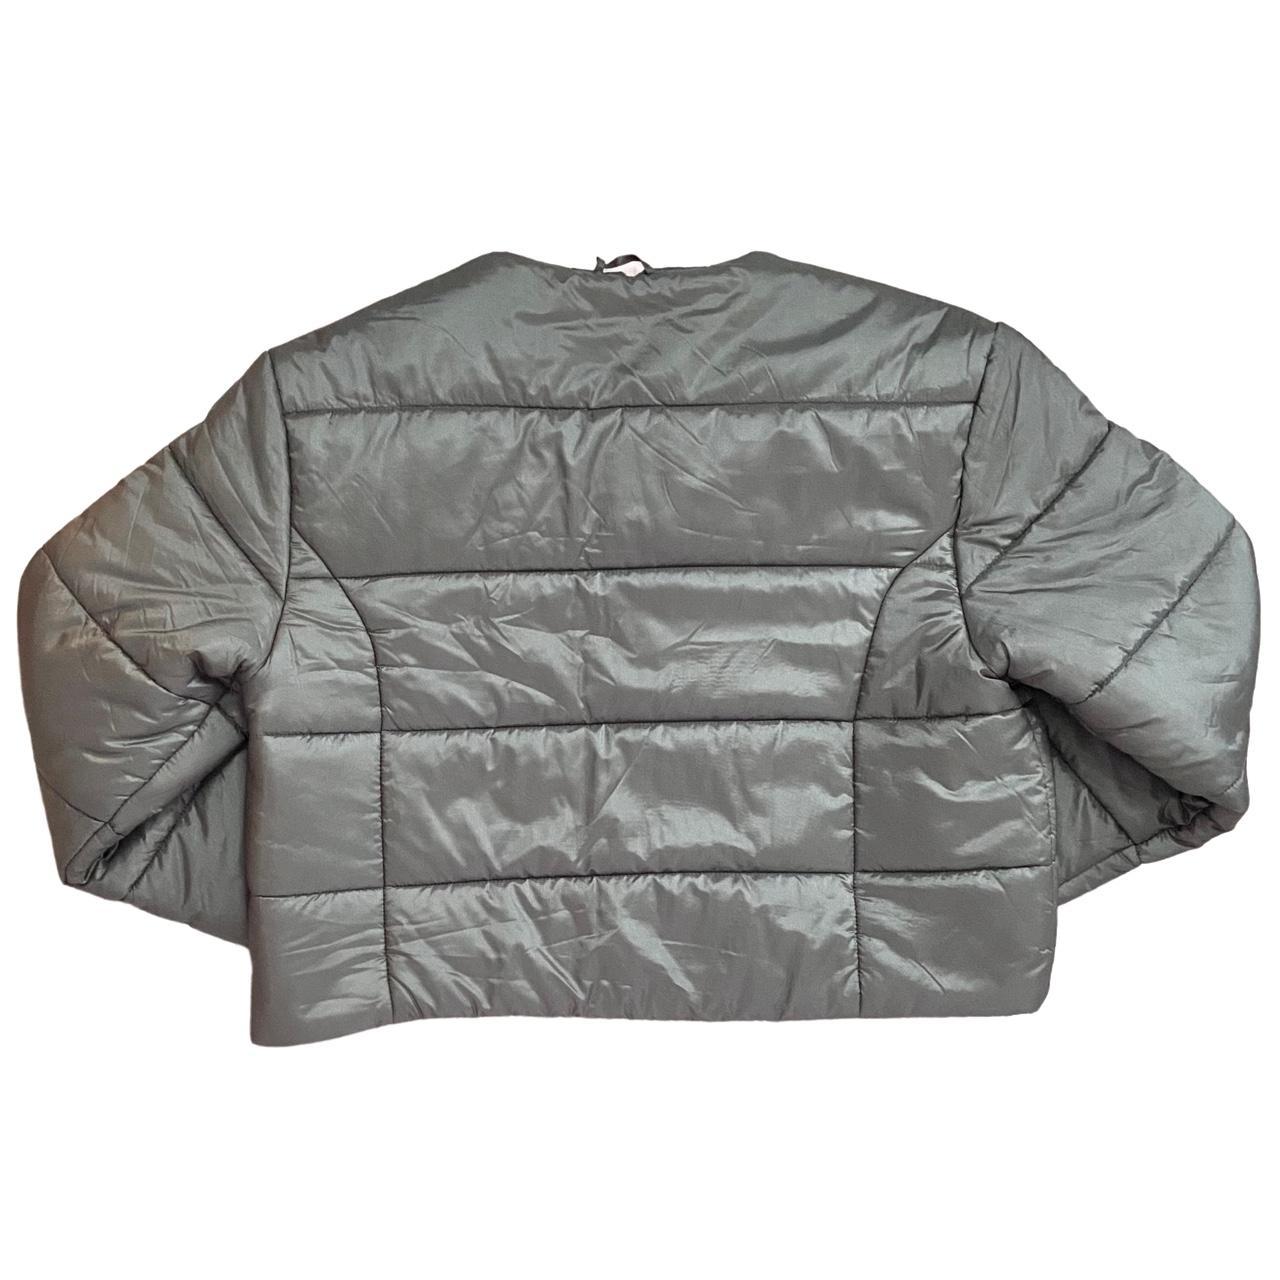 Product Image 2 - grey puffa brand jacket ❄️☁️🌨

✿